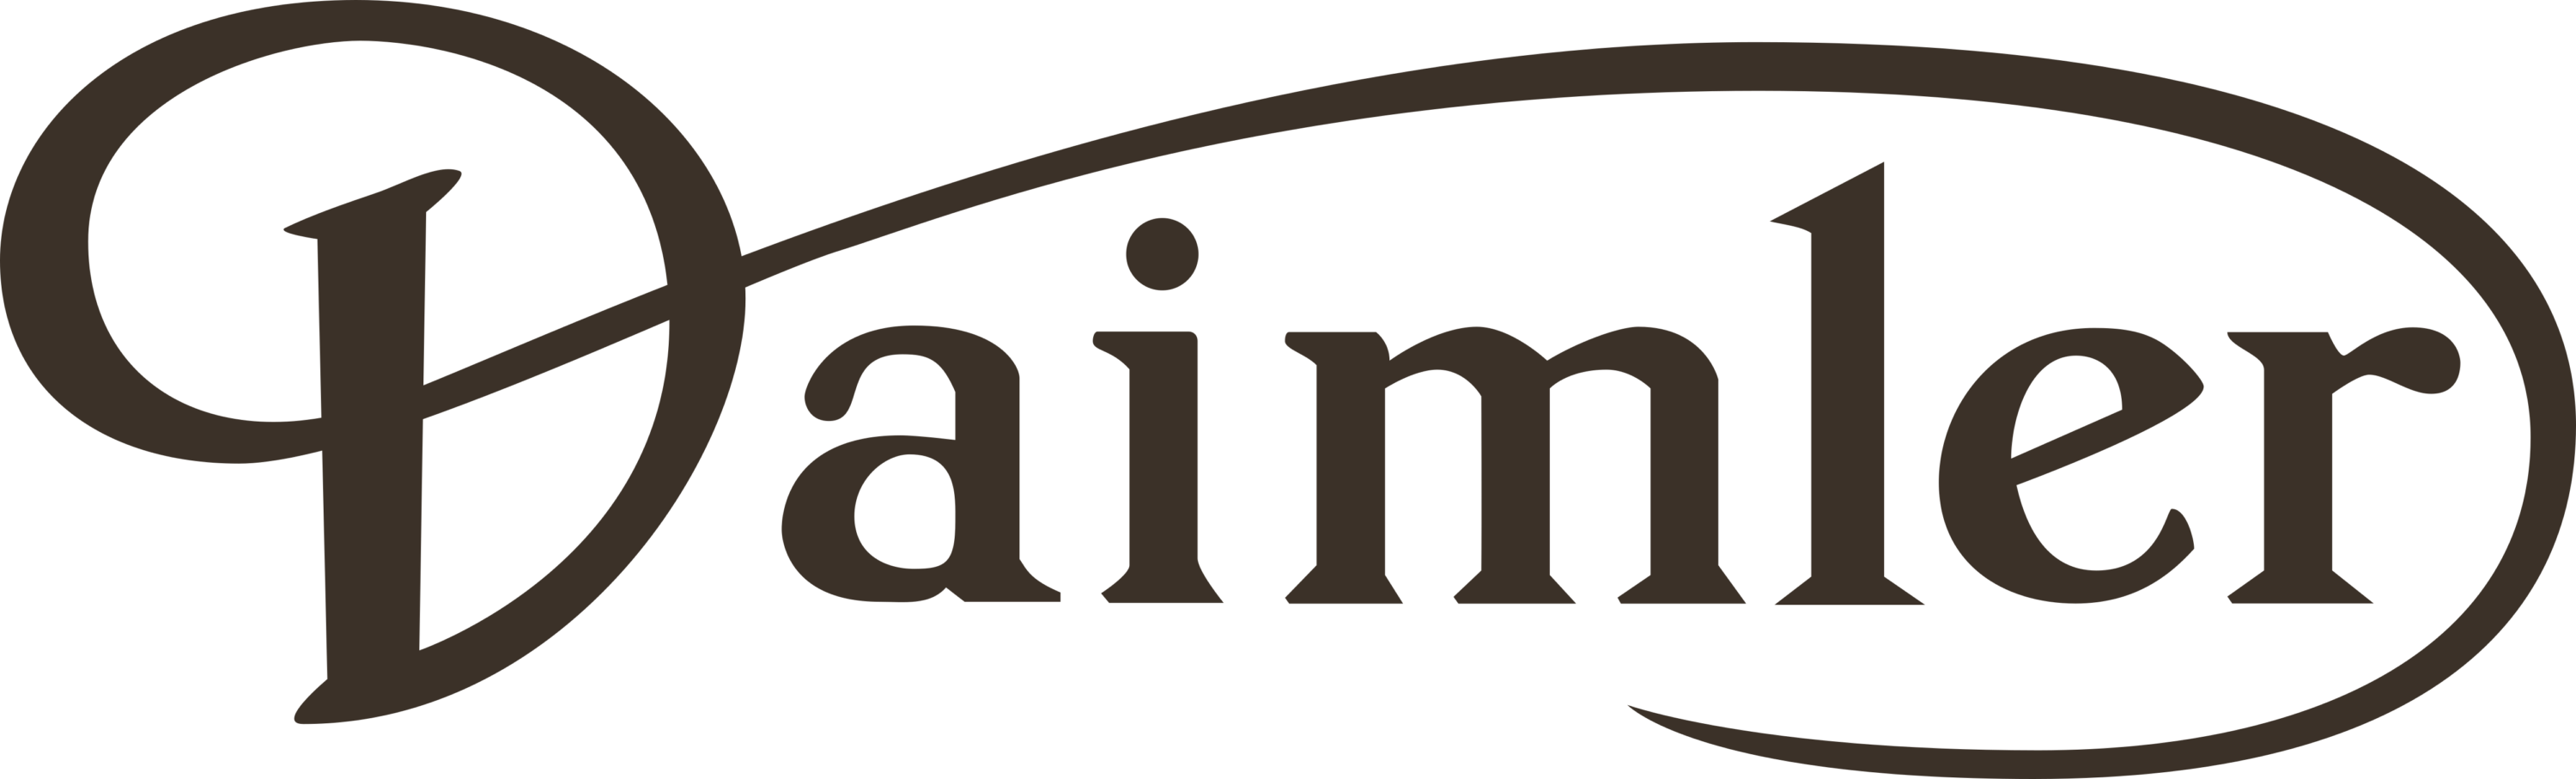 Daimler Company Logo